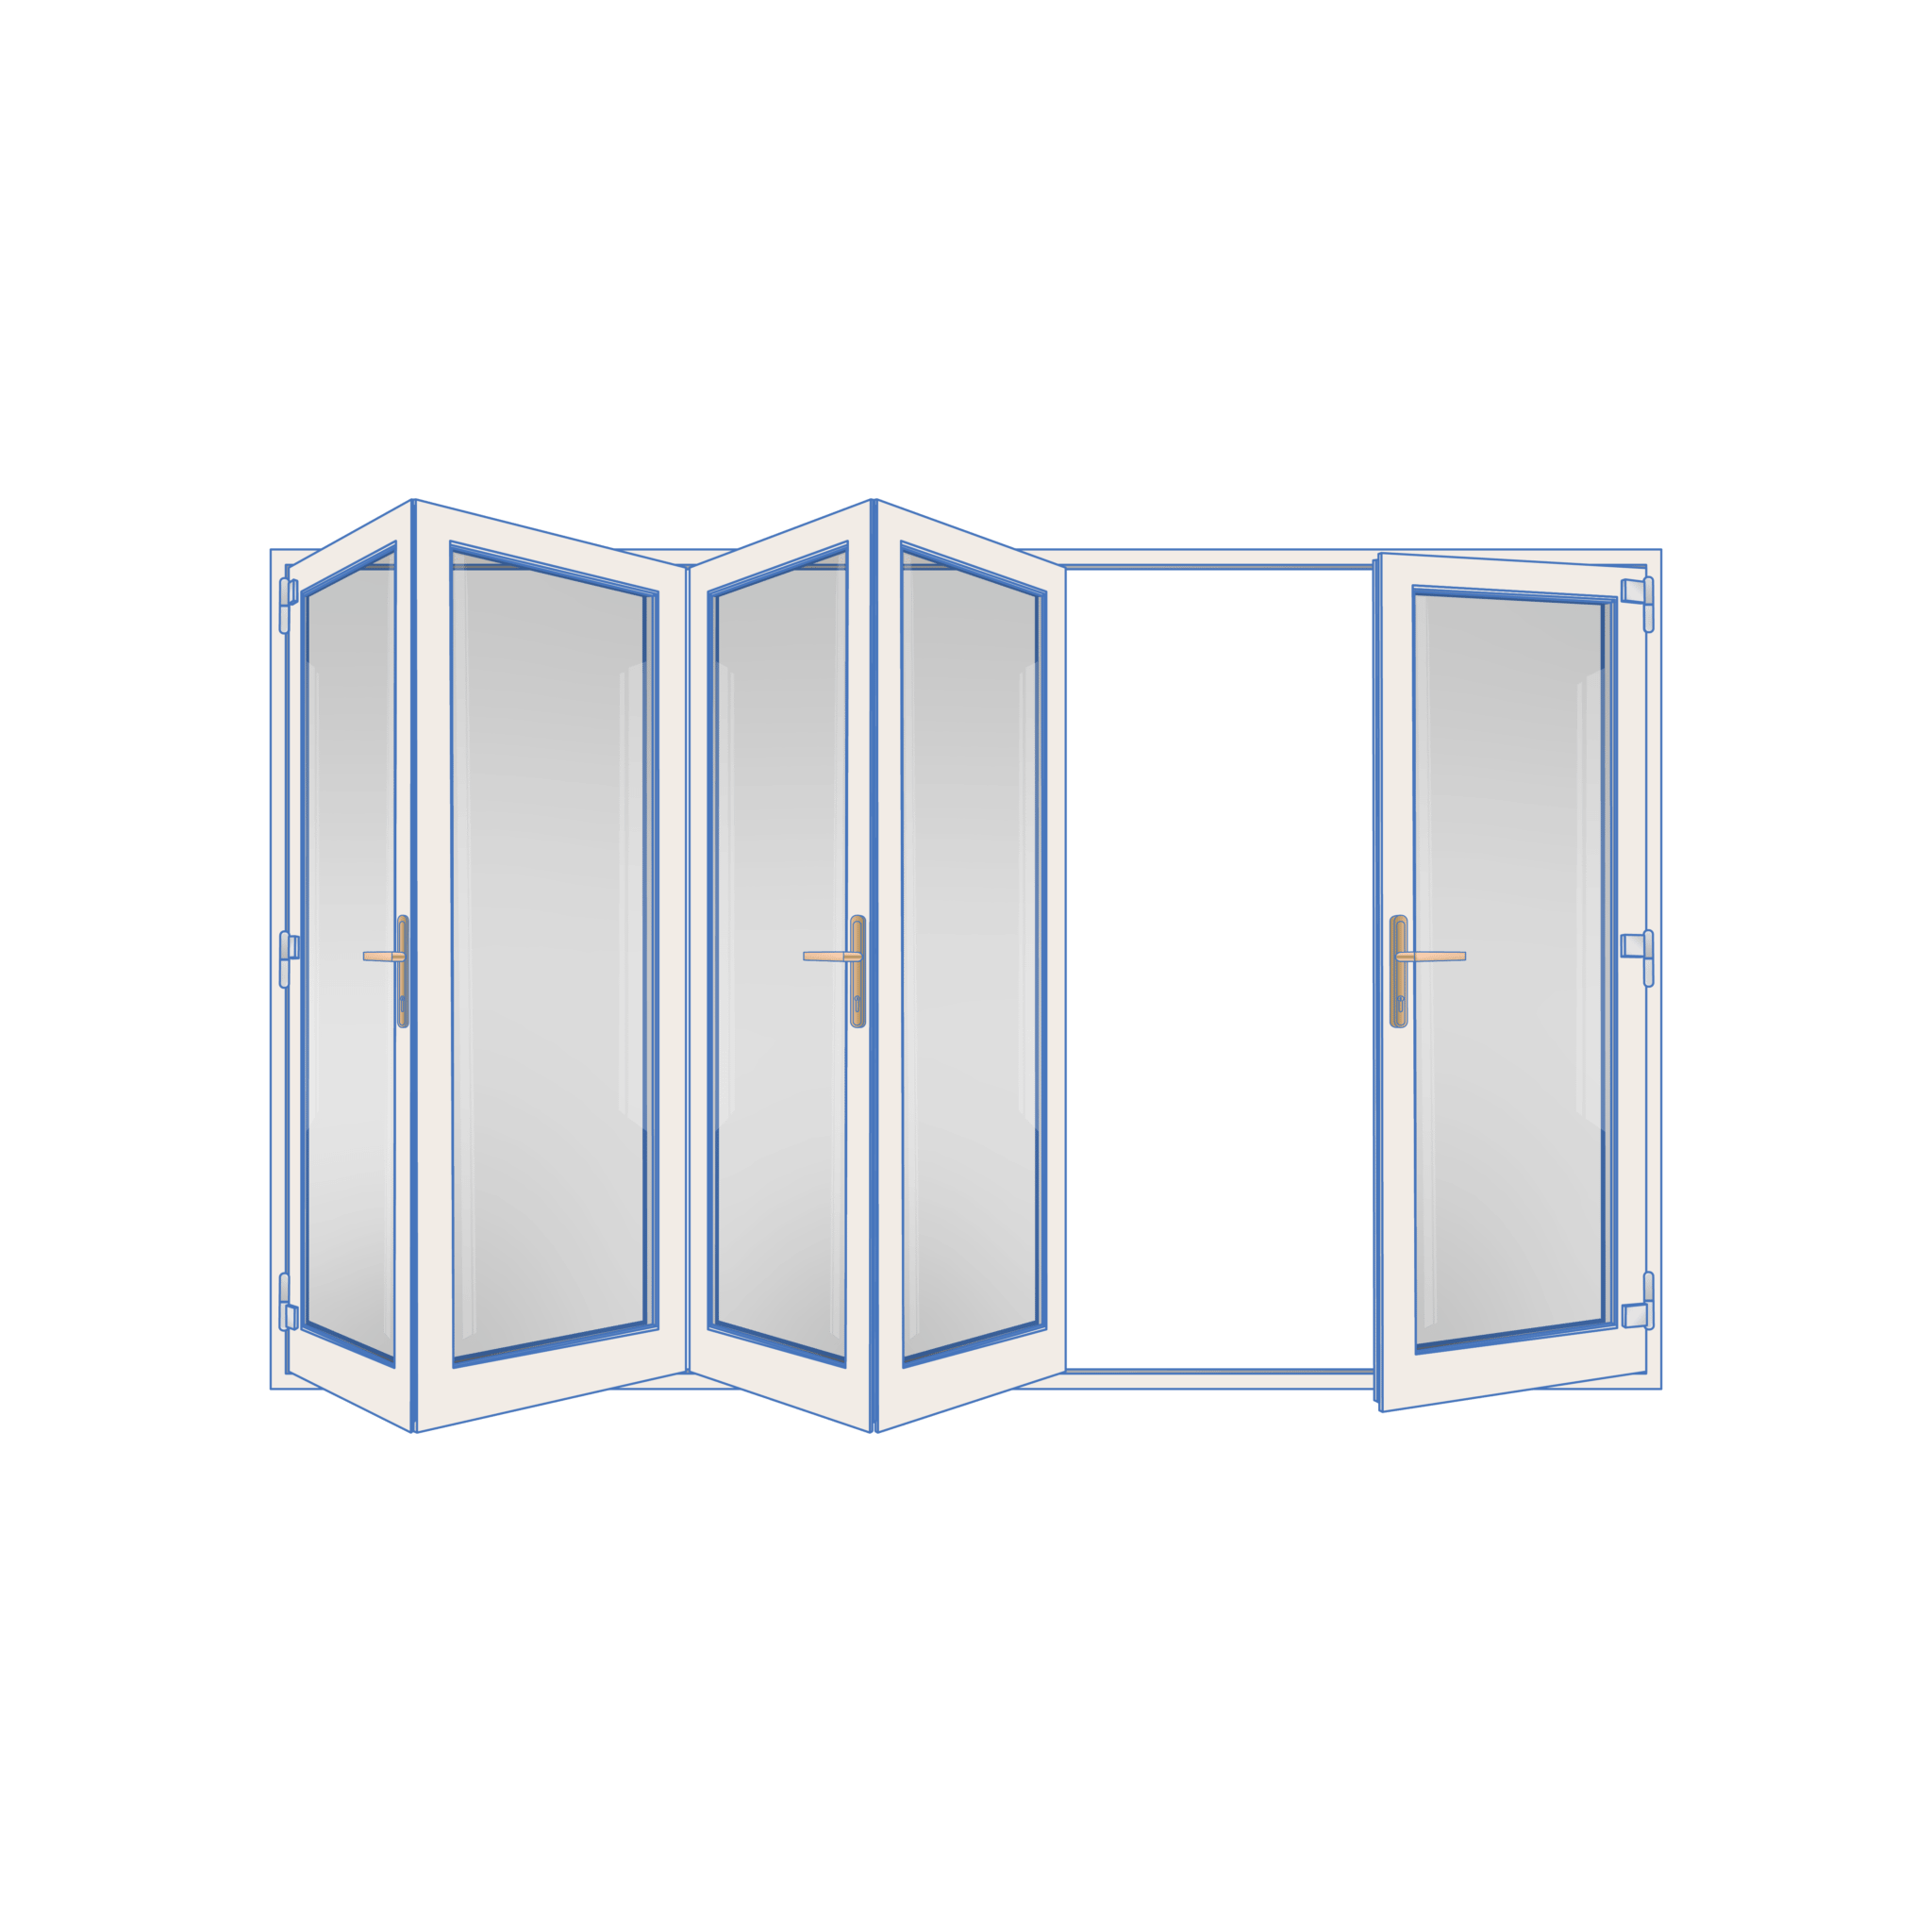 UPVC Bifold Doors with double glazed glass